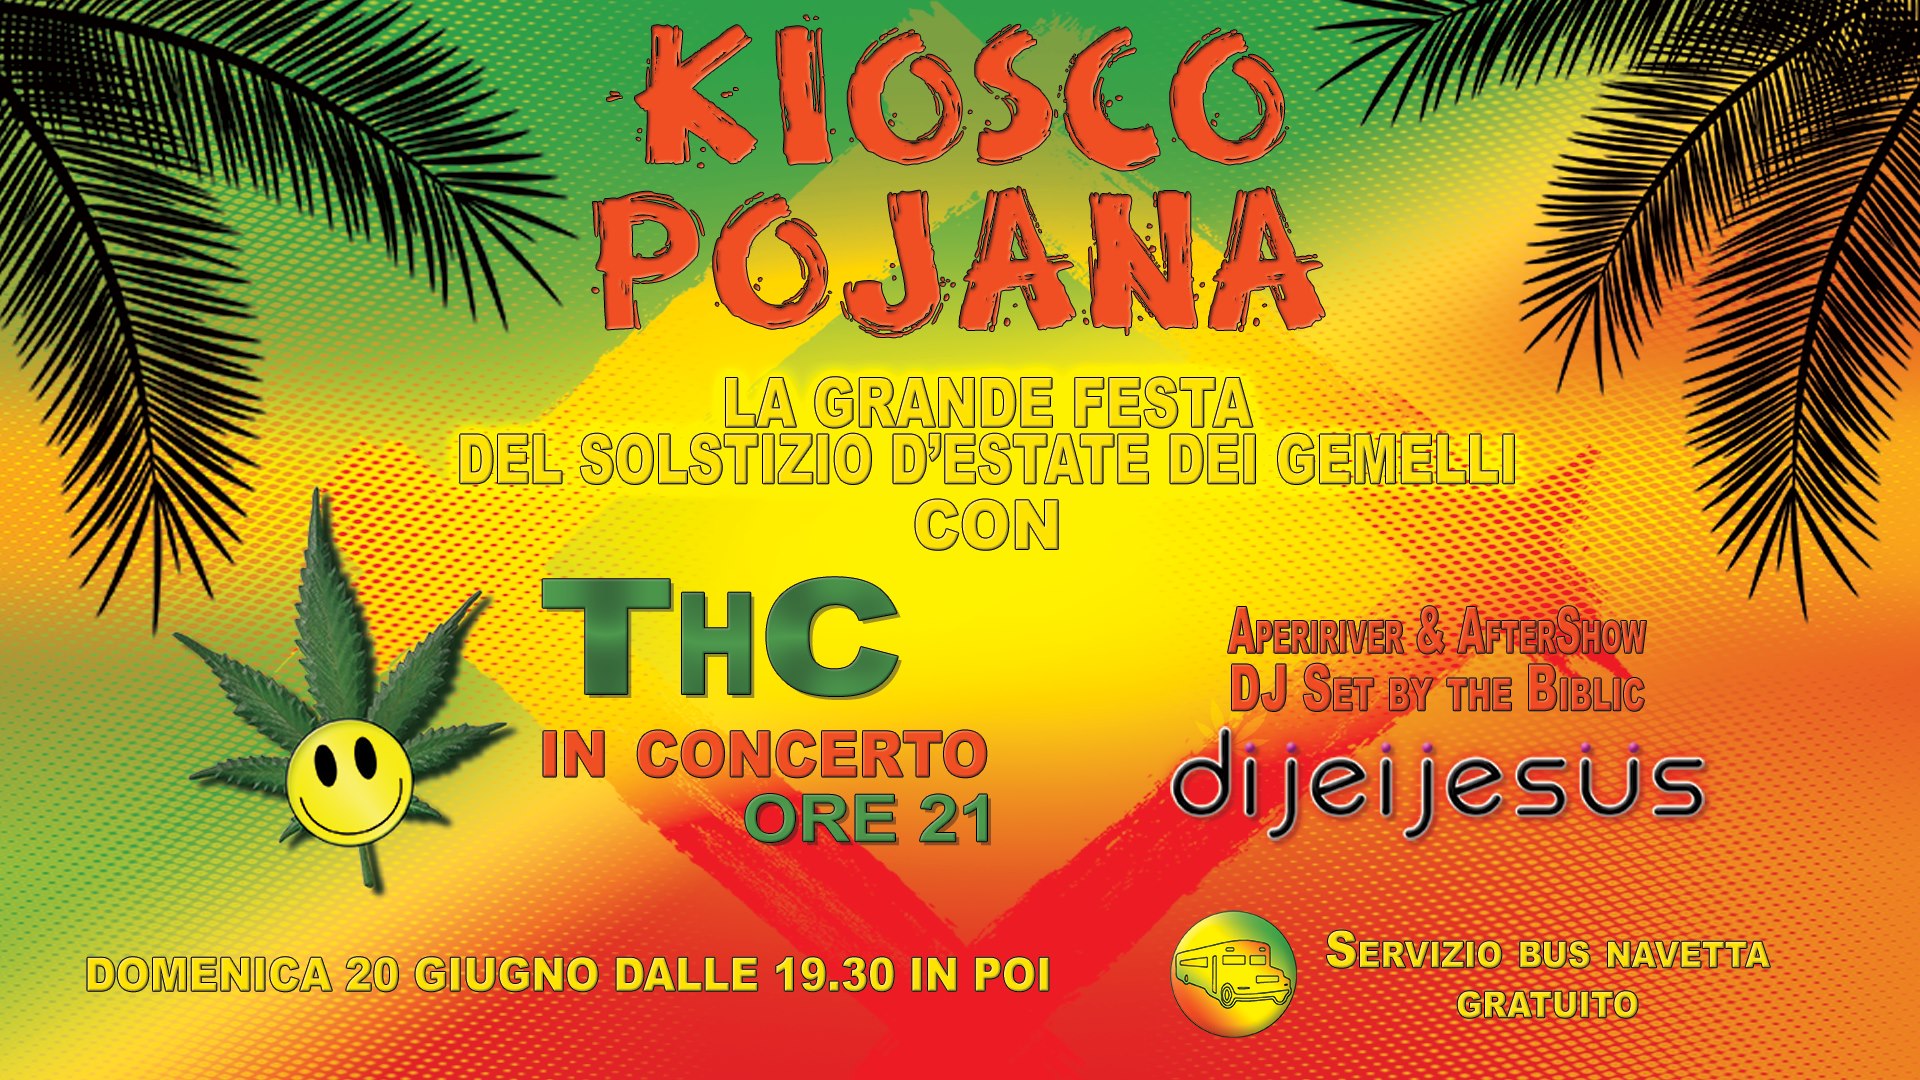 Solstizio d'estate in Pojana - con THC & Dijeijesus - EventiFVG.it